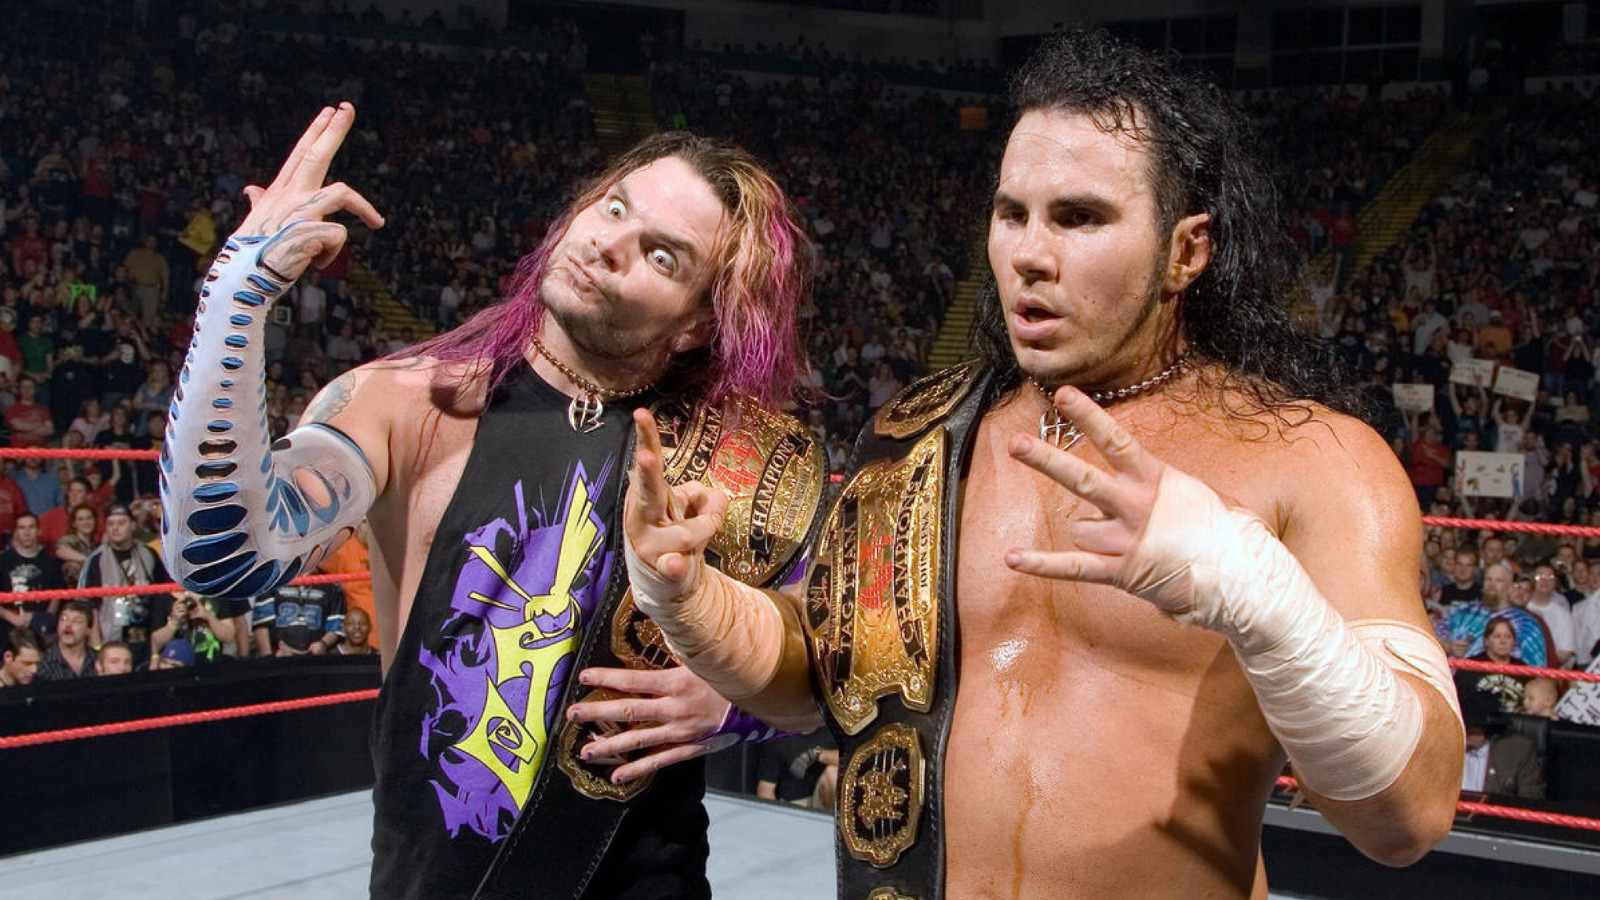 Who is older between Jeff Hardy and Matt Hardy?